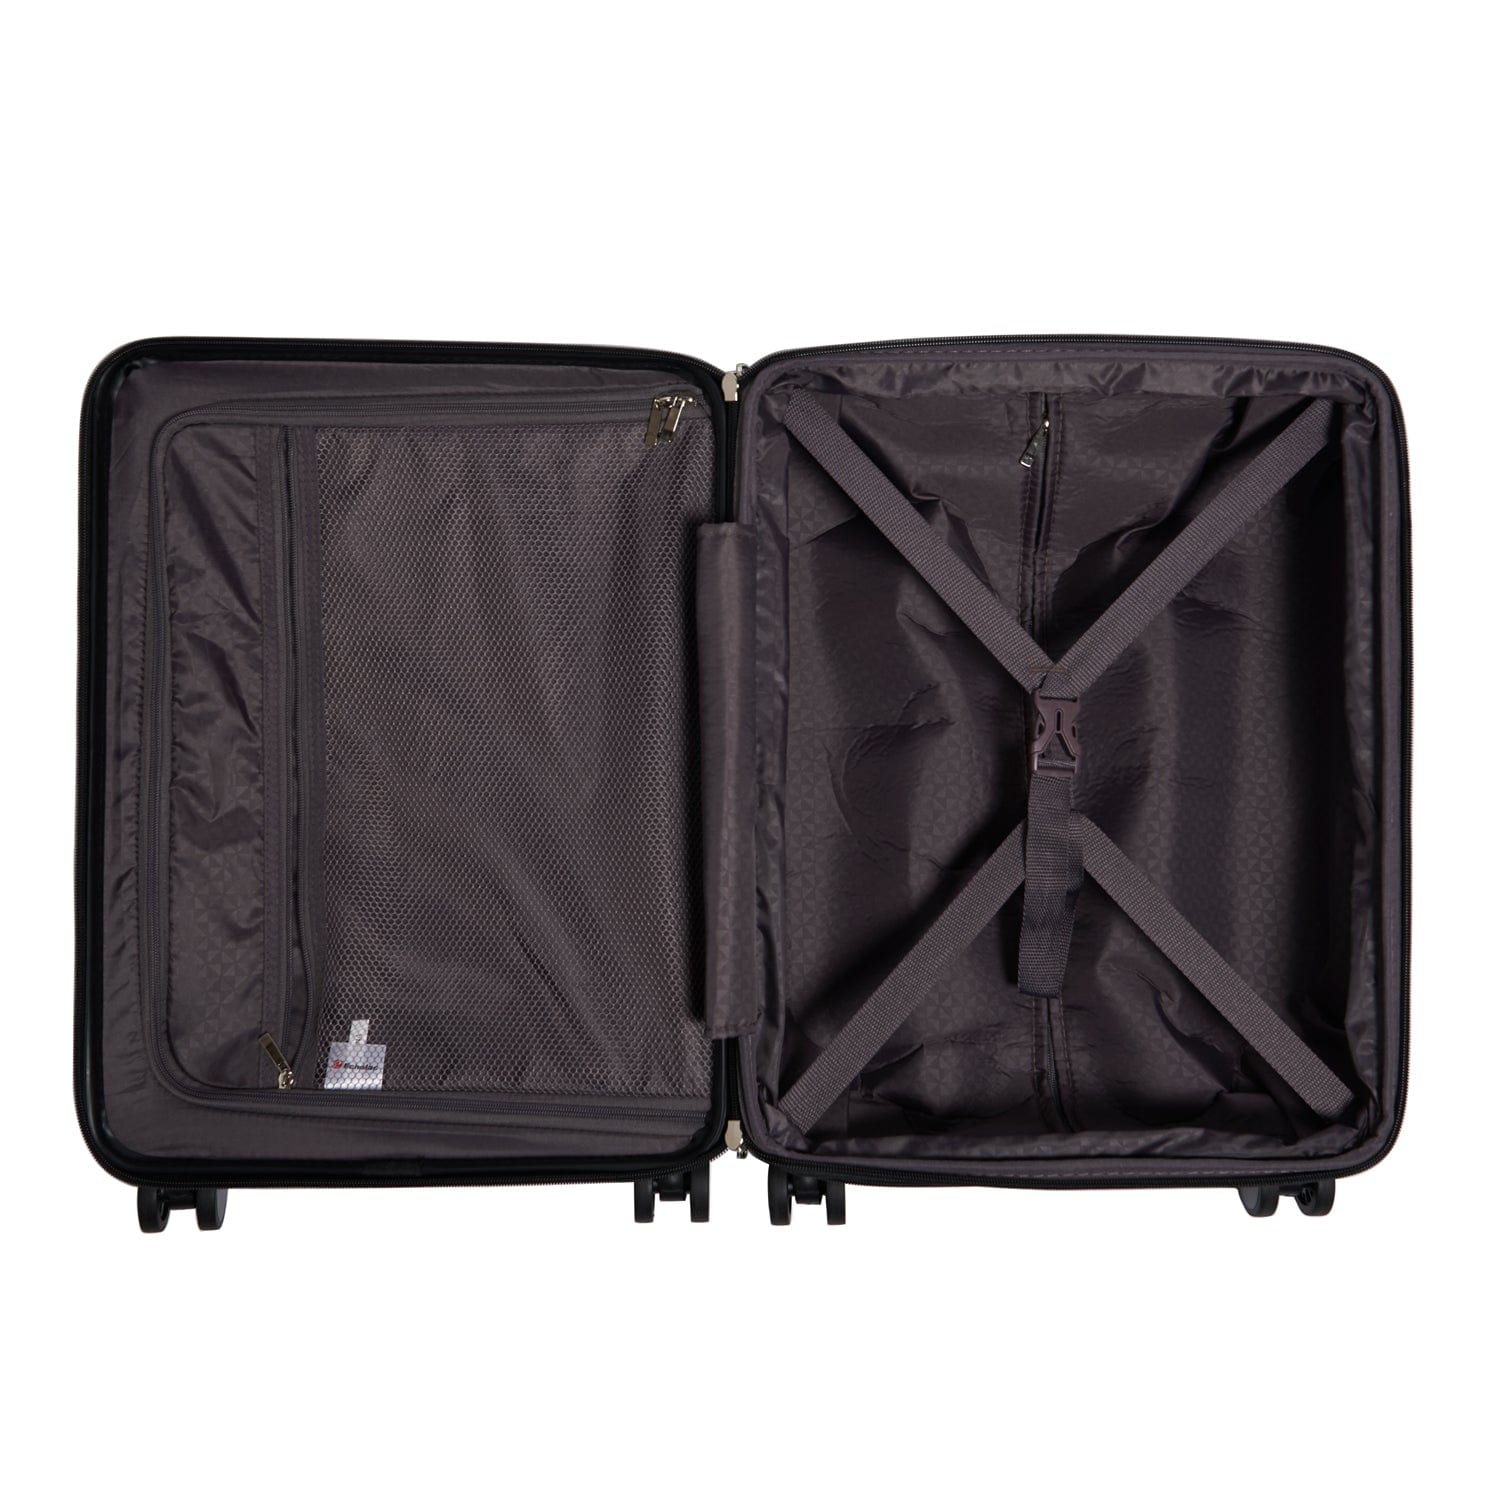 Echolac Extravagant 56cm Hardcase Expandable 4 Double Wheel Cabin Luggage Trolley Black - CTH0062 S- 20 BLACK